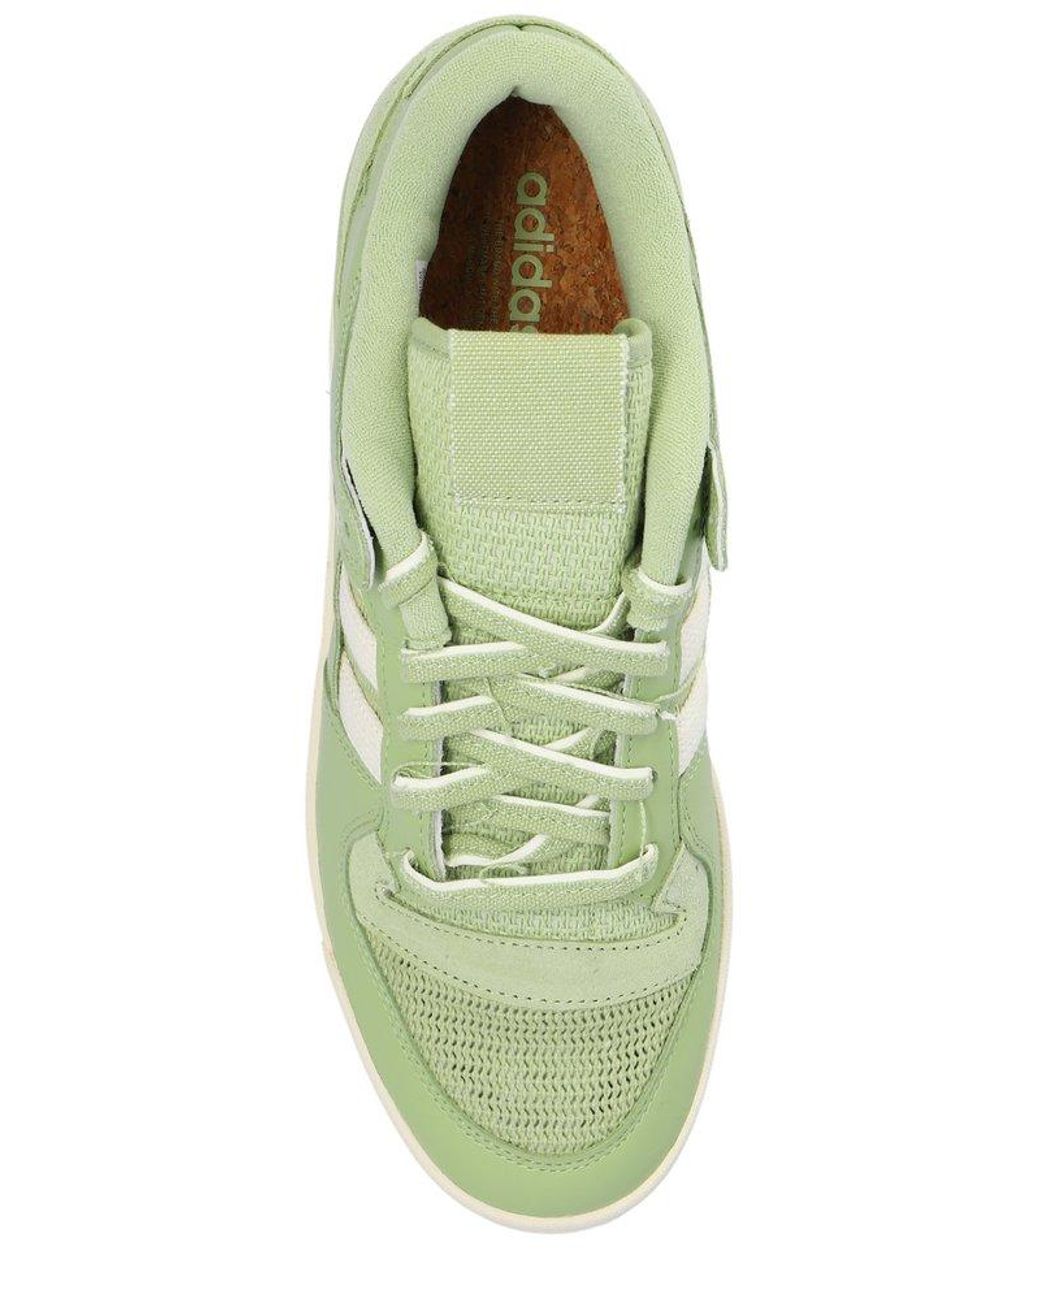 vl shoes green